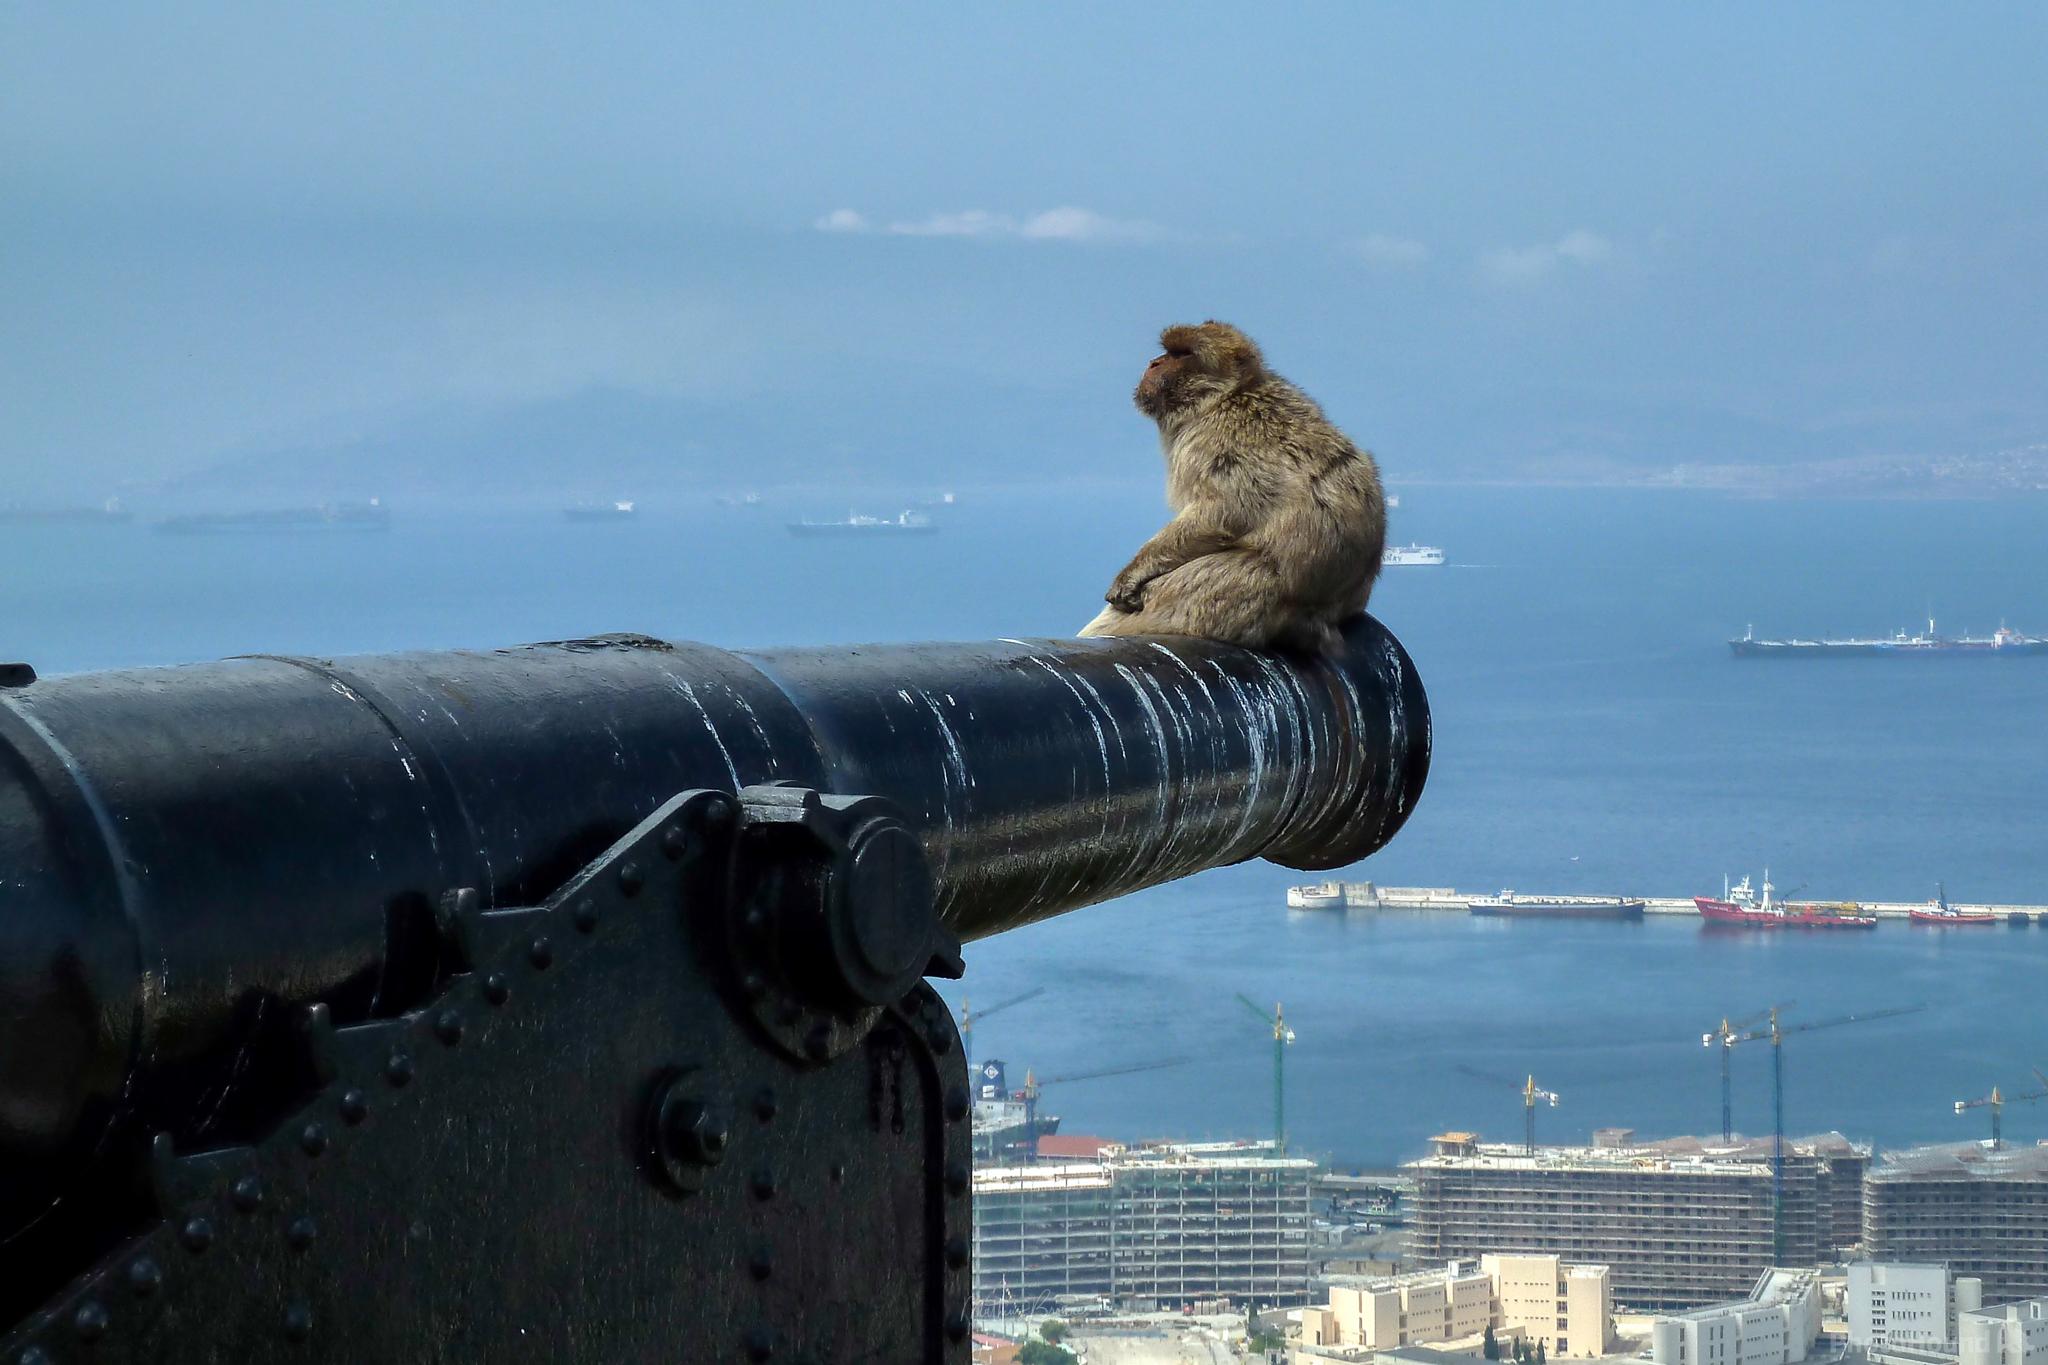 Gibraltar photo locations